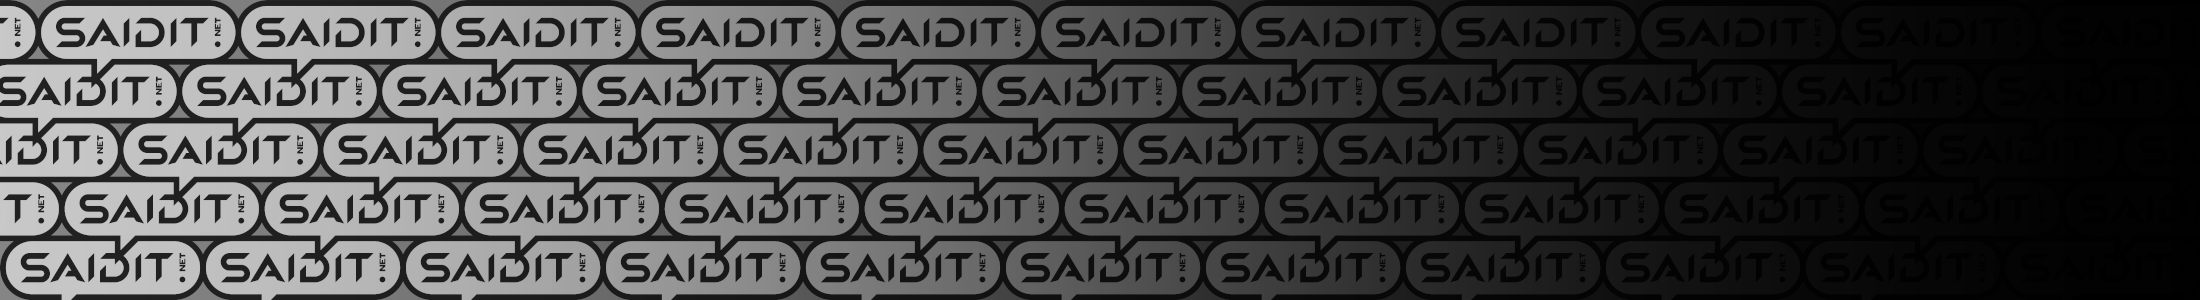 Image Saidit-2019-Banner-Tiled-Logo-Day-FadeToBlack-2200x300